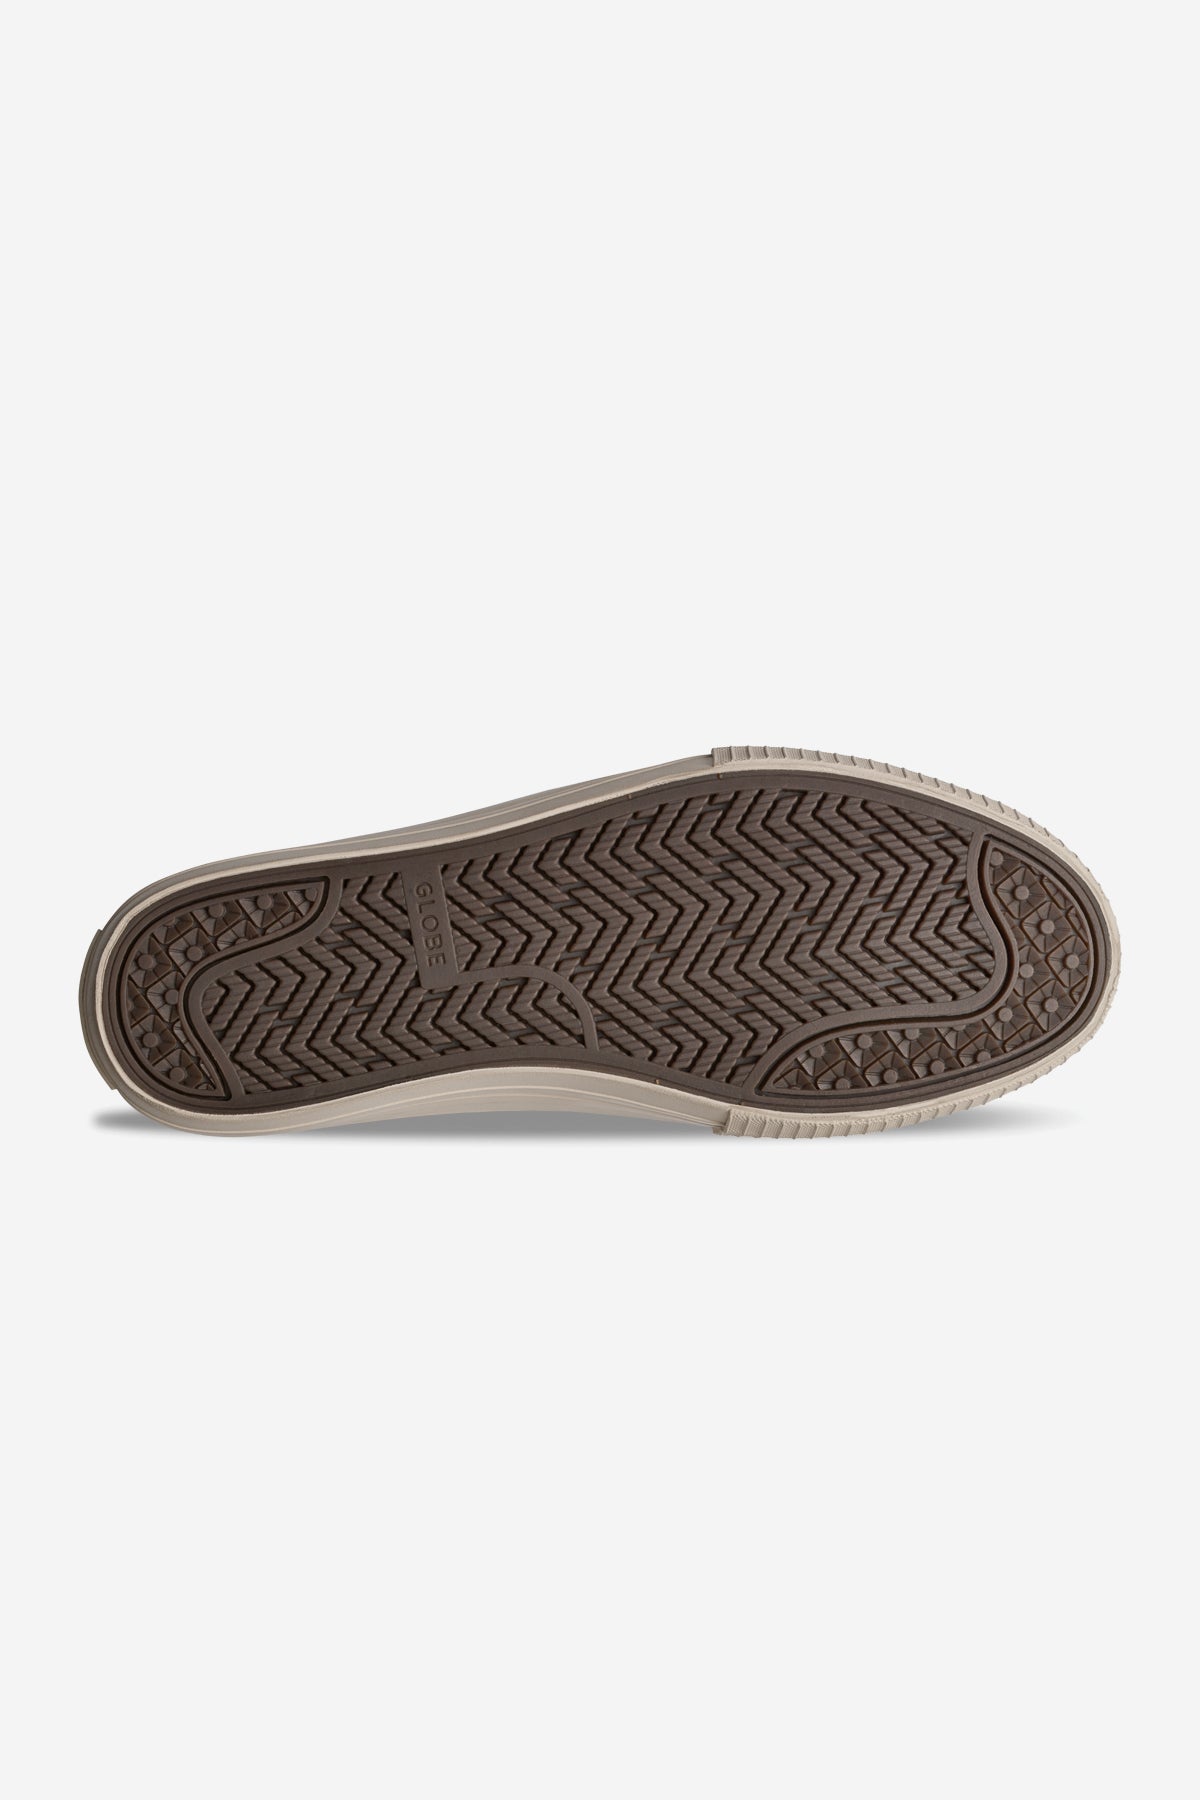 Globe - Gillette - Olive/Crema - skateboard Zapatos